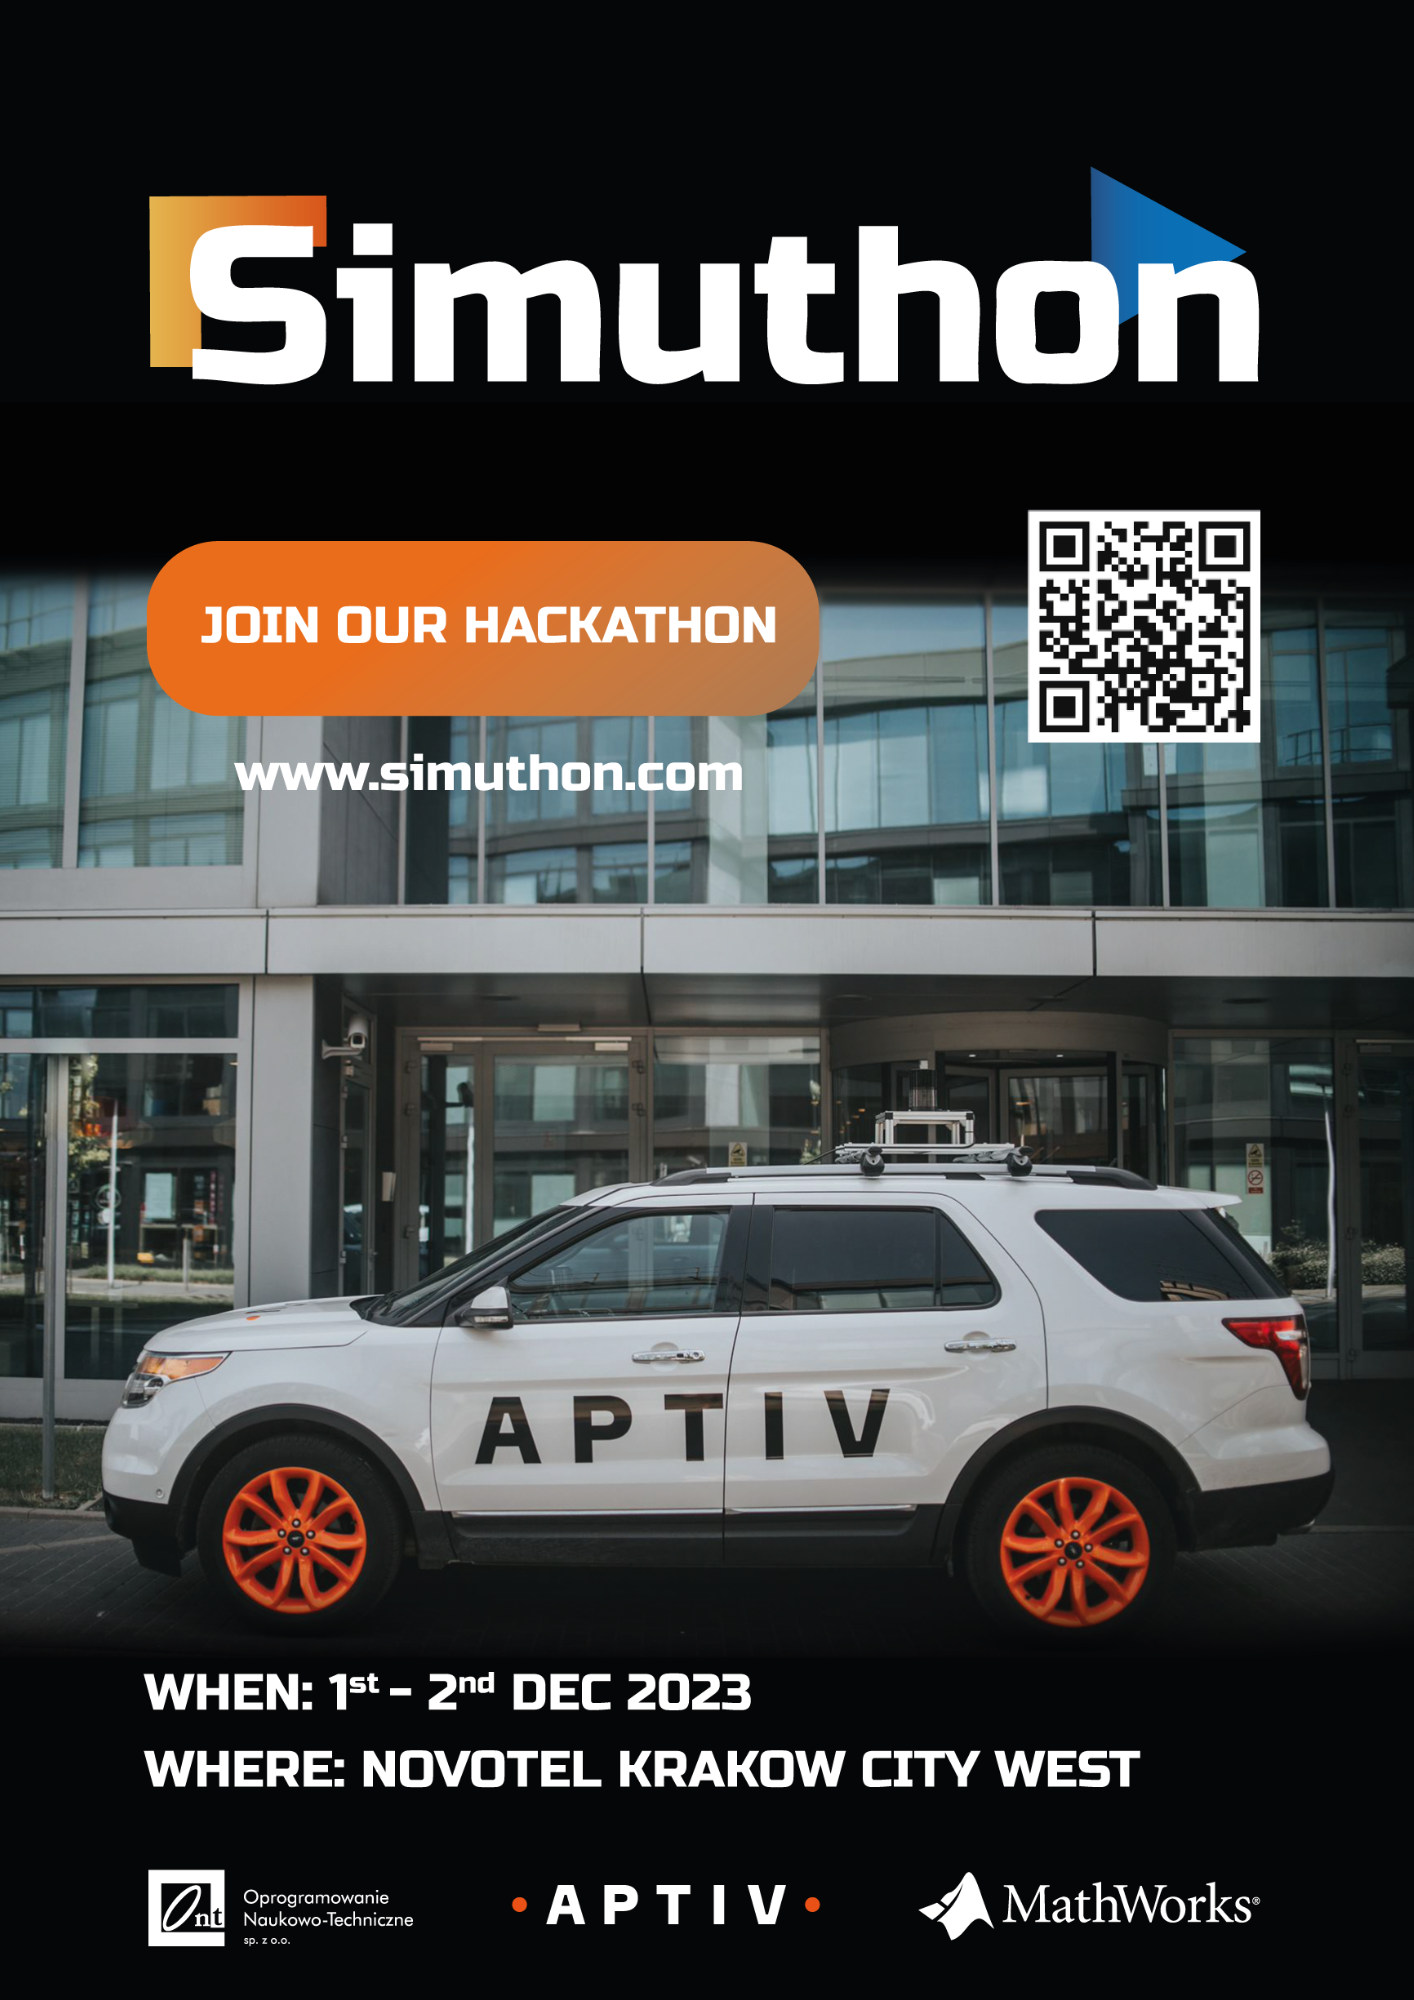 Simuthon, plakat, grafika ozdobnikowa, tekst:join our hackathon. 1-2 Dec 2023, Novotel Krakow City West 